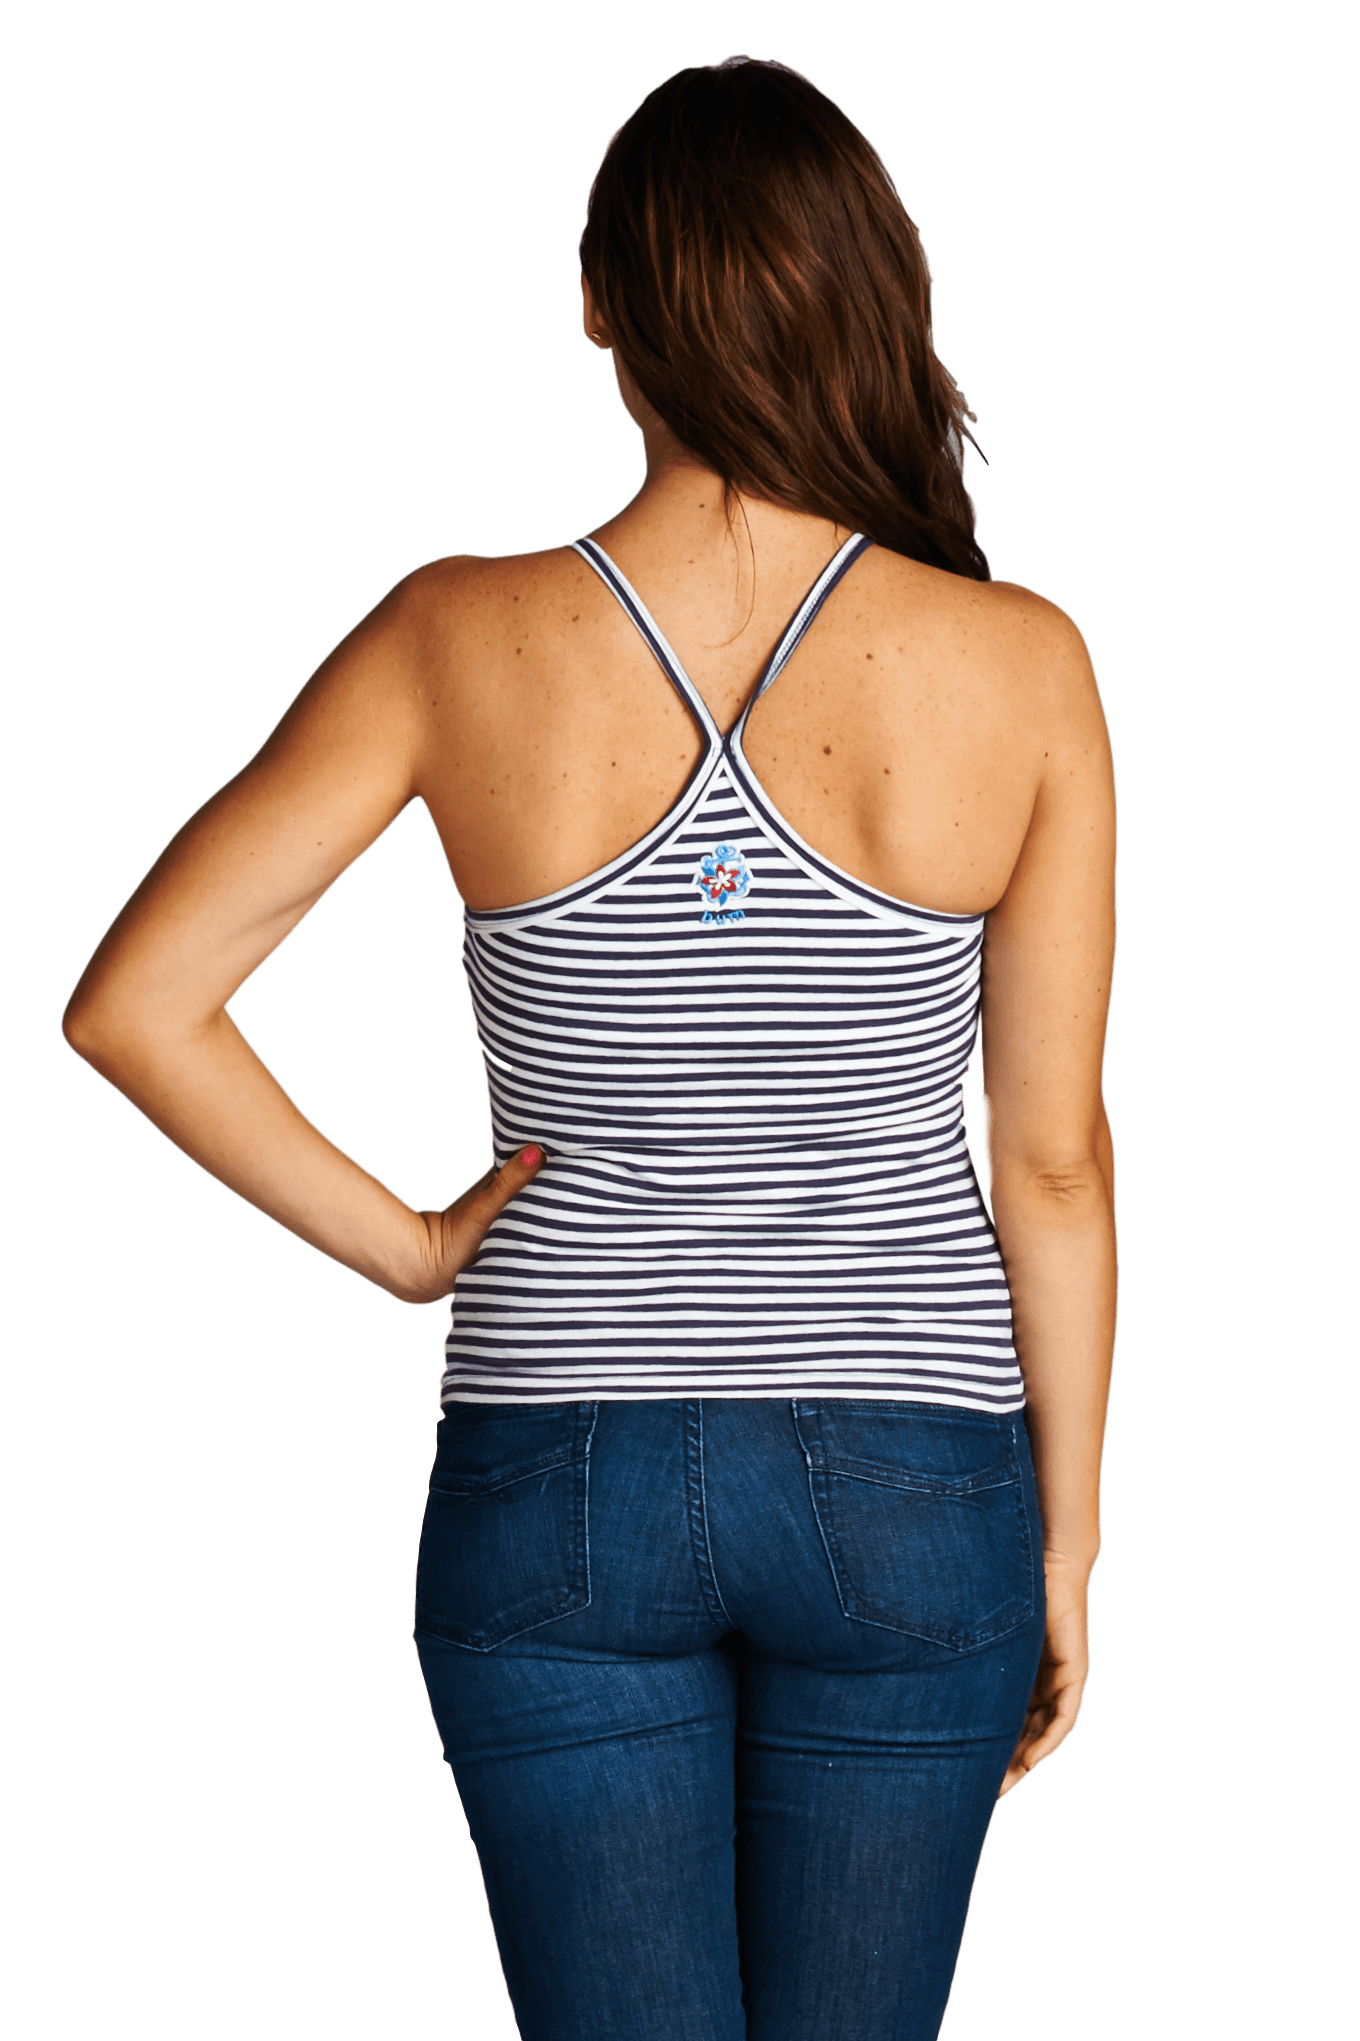 Women's Shirts - Tank Tops Women's Tight Striped Camisole Tank Top